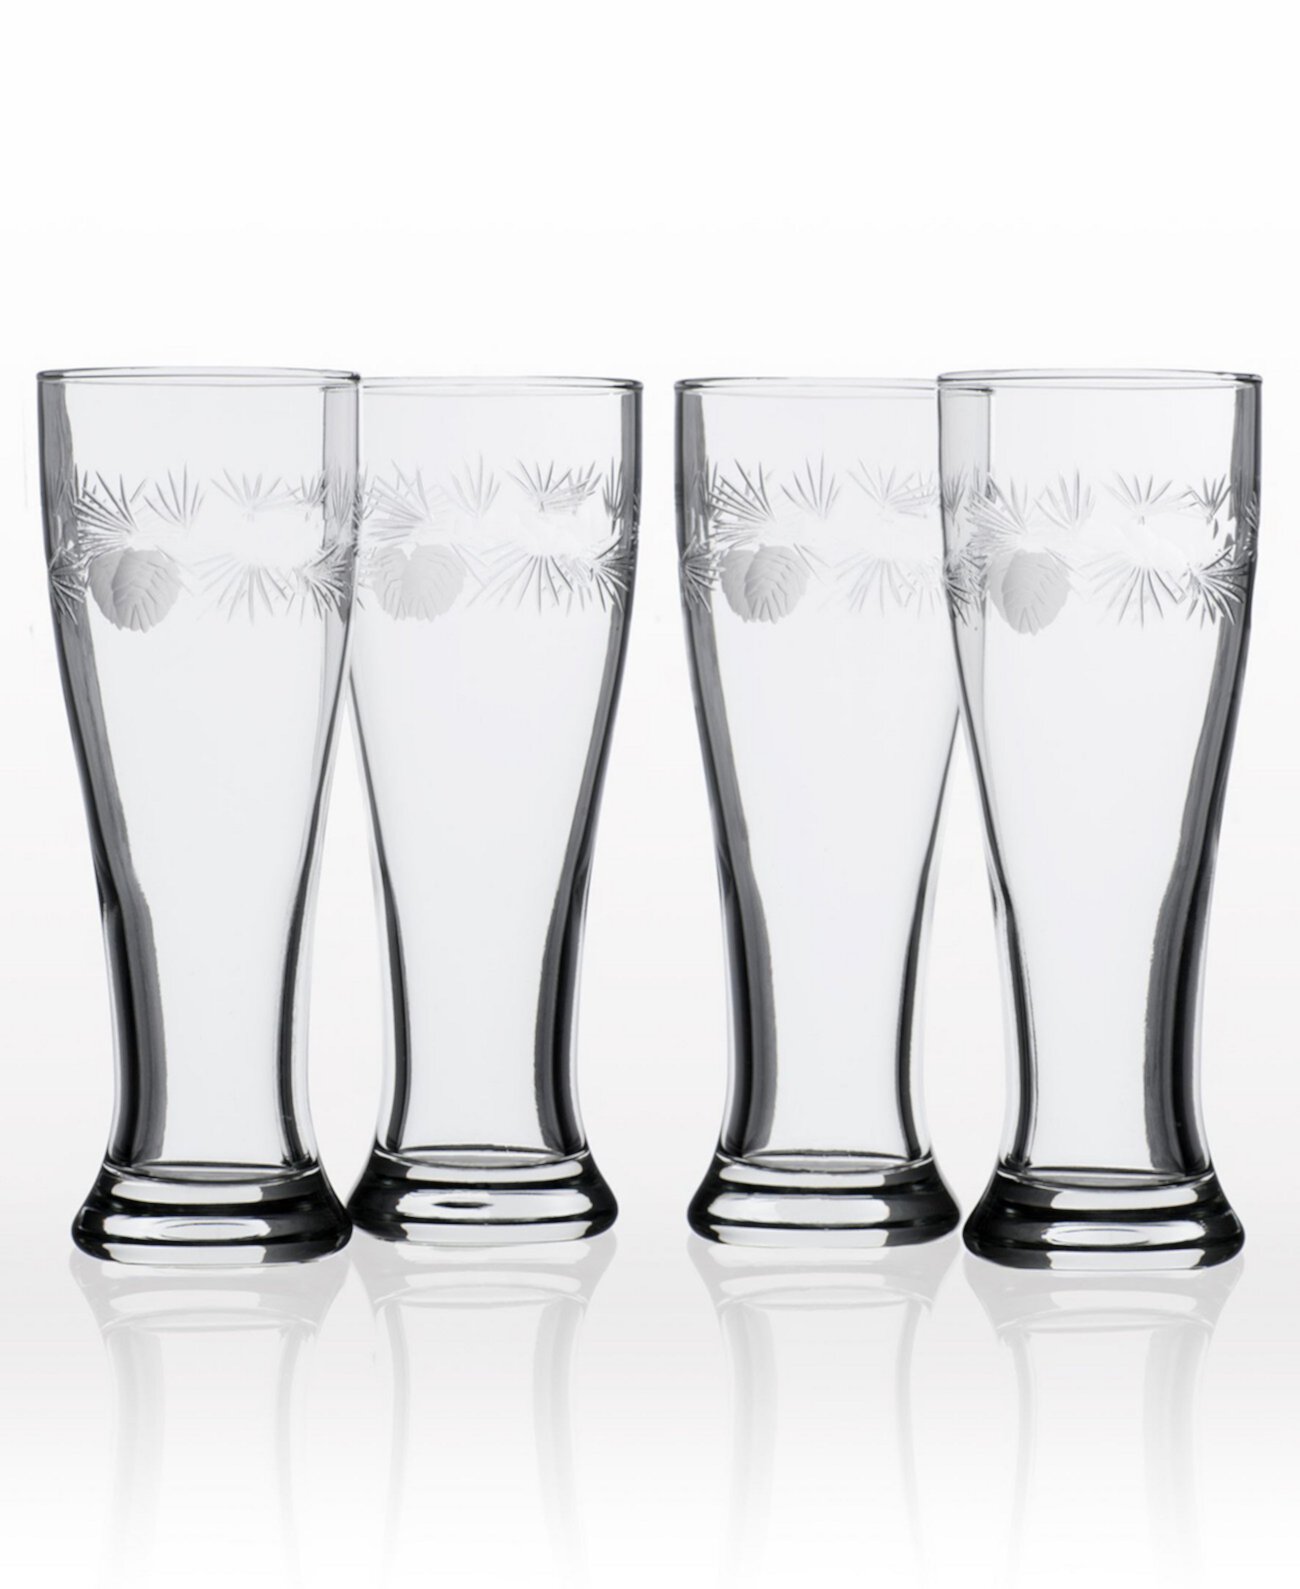 Пиво Icy Pine Pilsner 16 унций - набор из 4 стаканов Rolf Glass